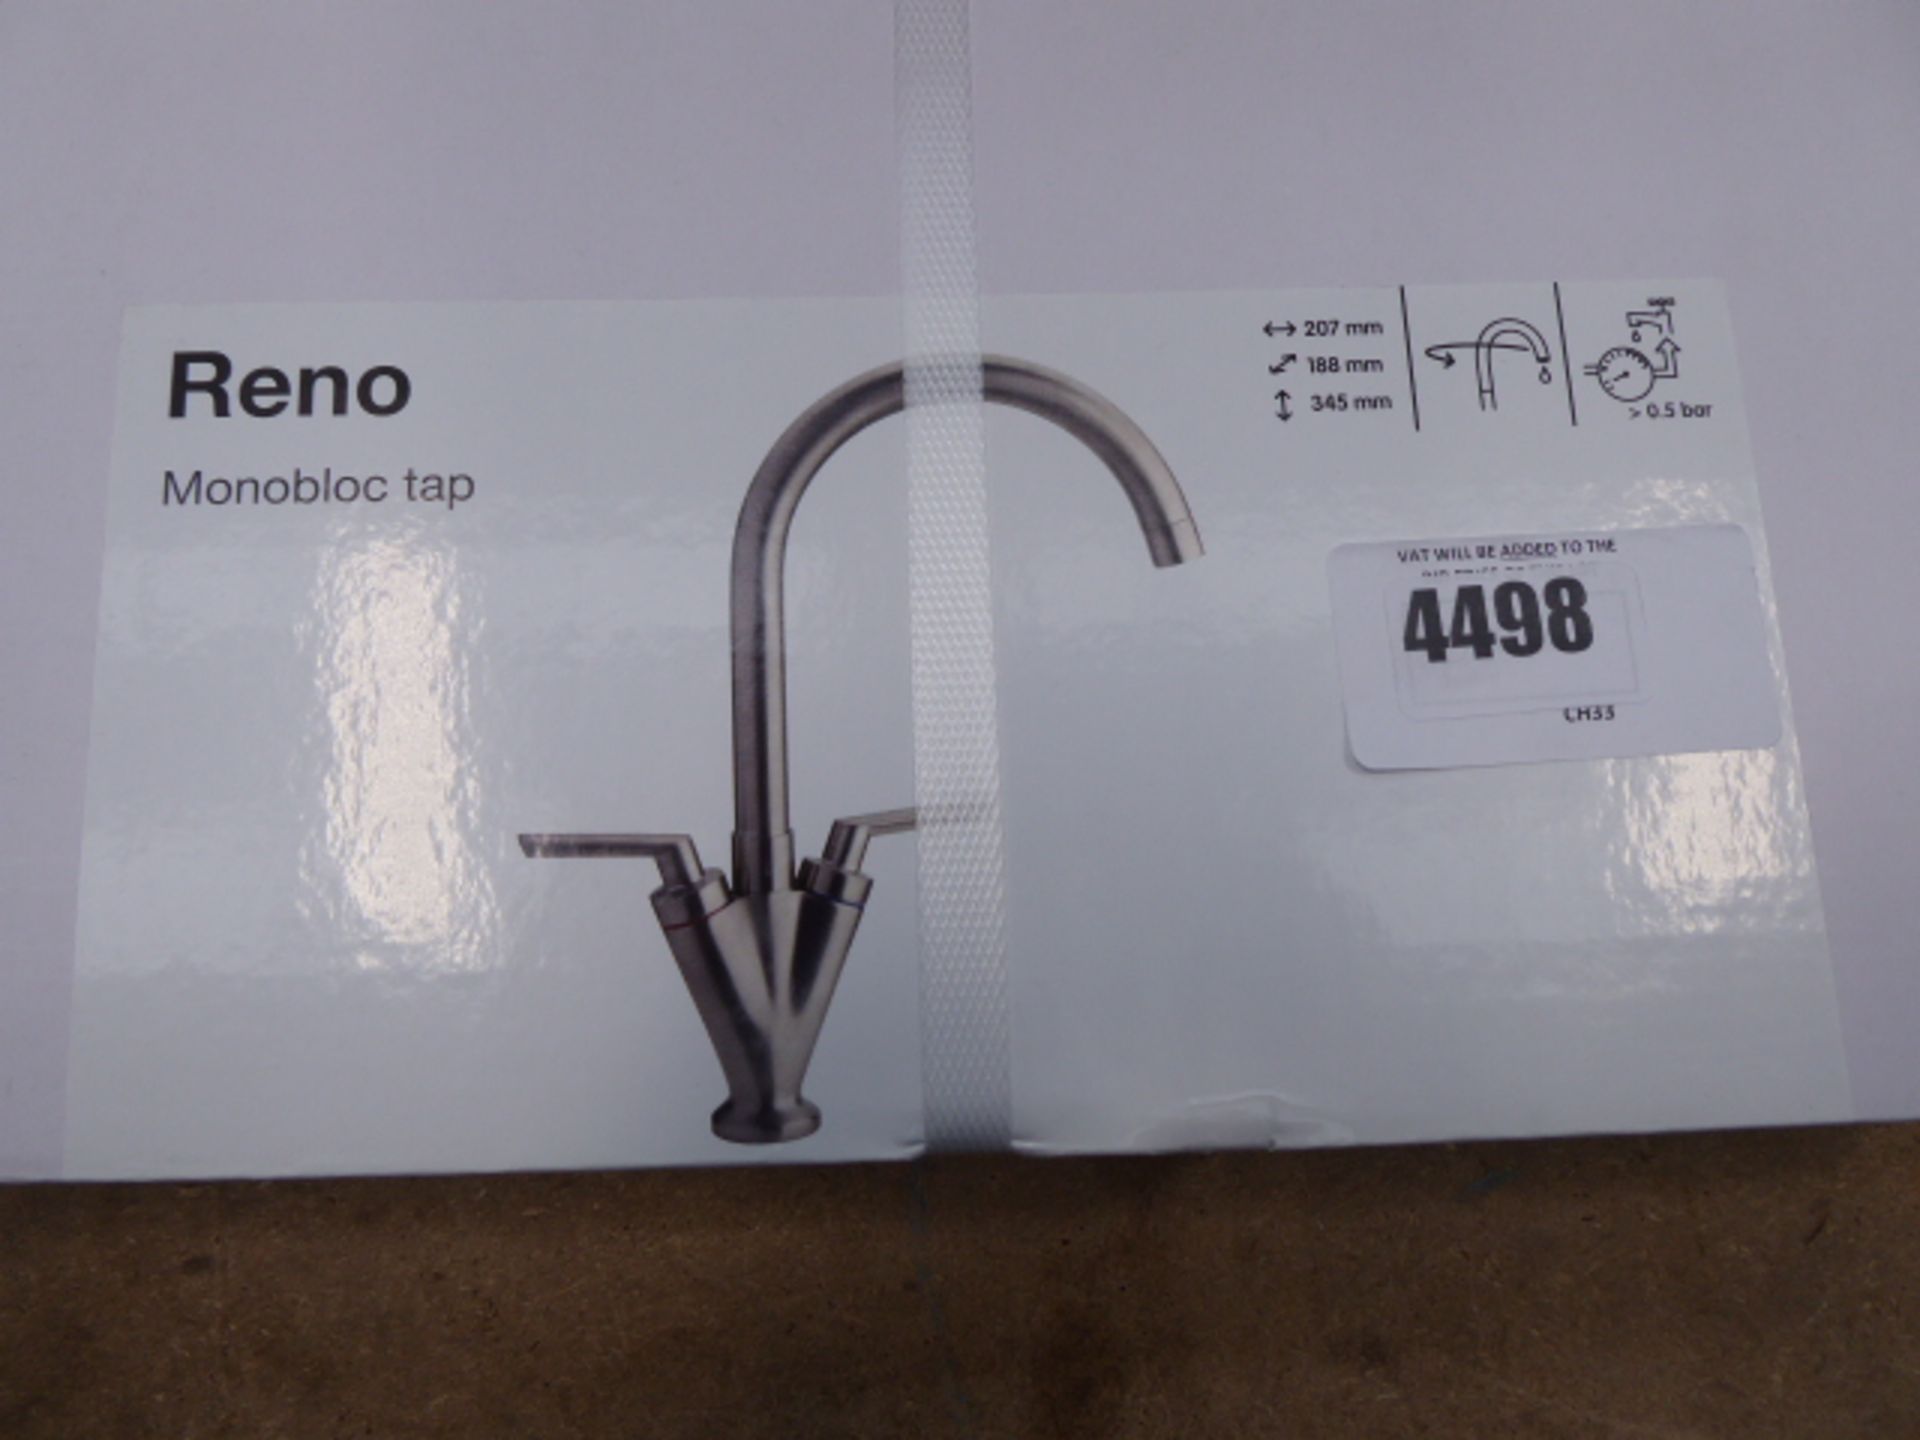 Reno boxed tap